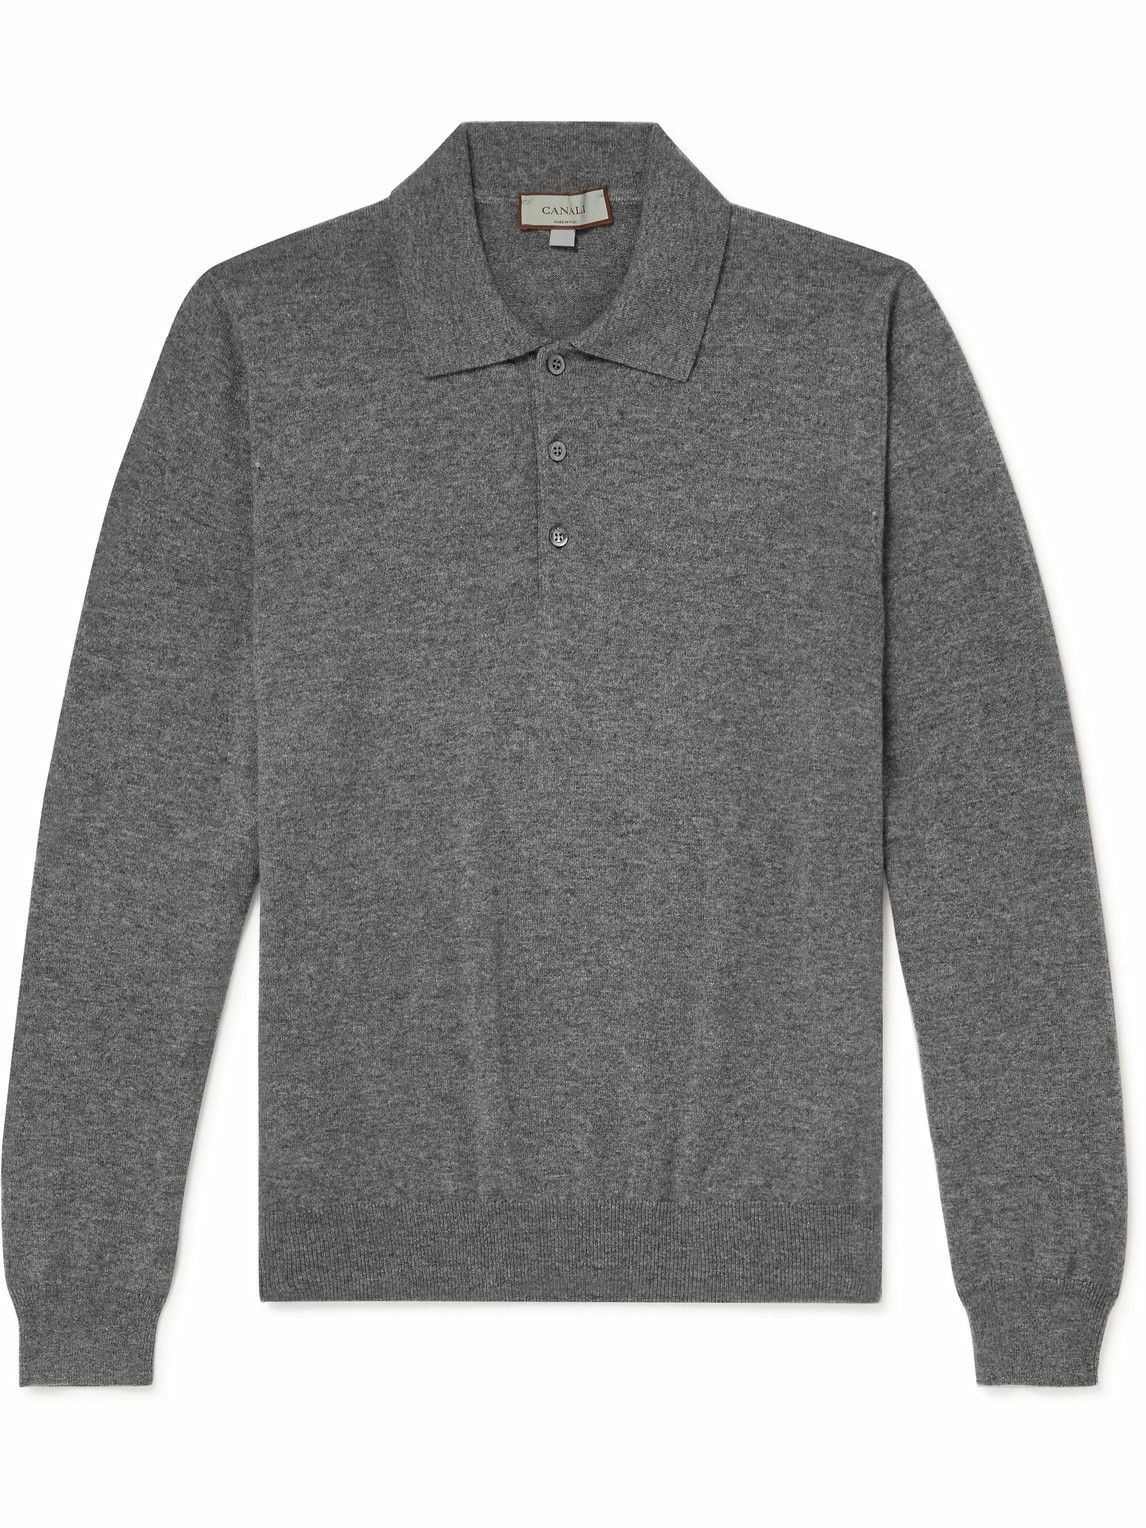 Canali - Cashmere Polo Shirt - Gray Canali